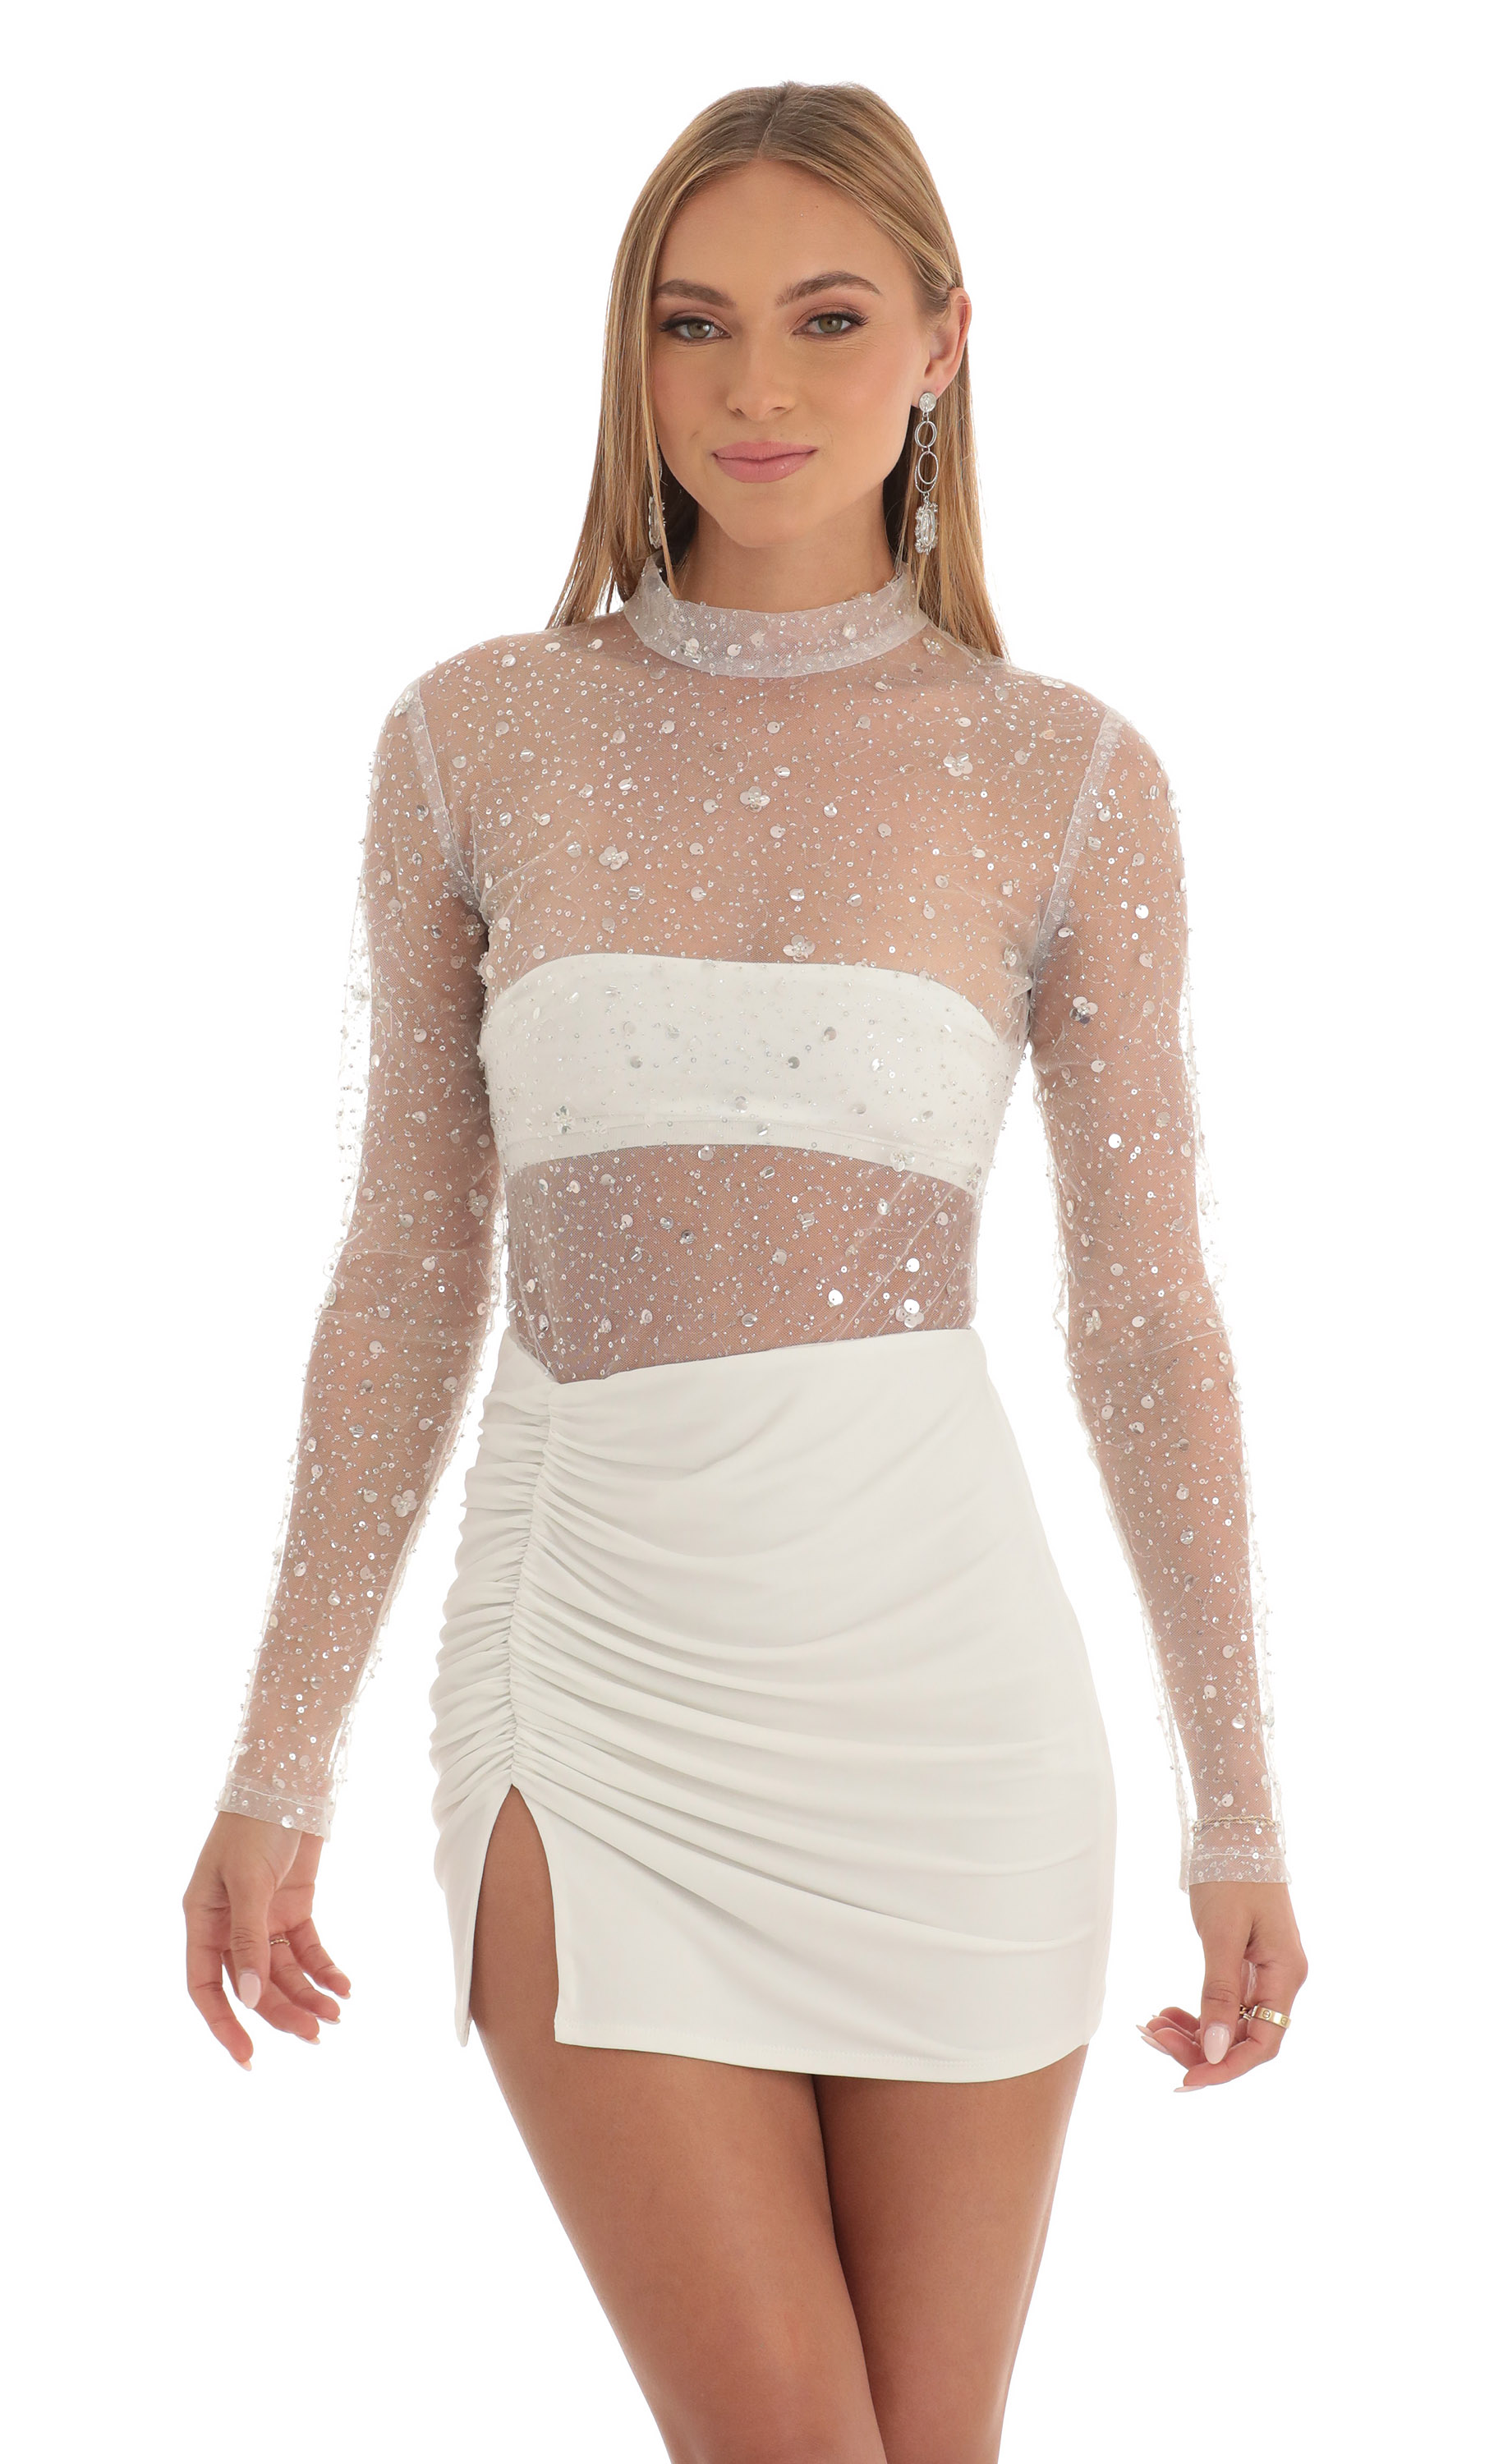 Helia Glitter Sheer Dress in White